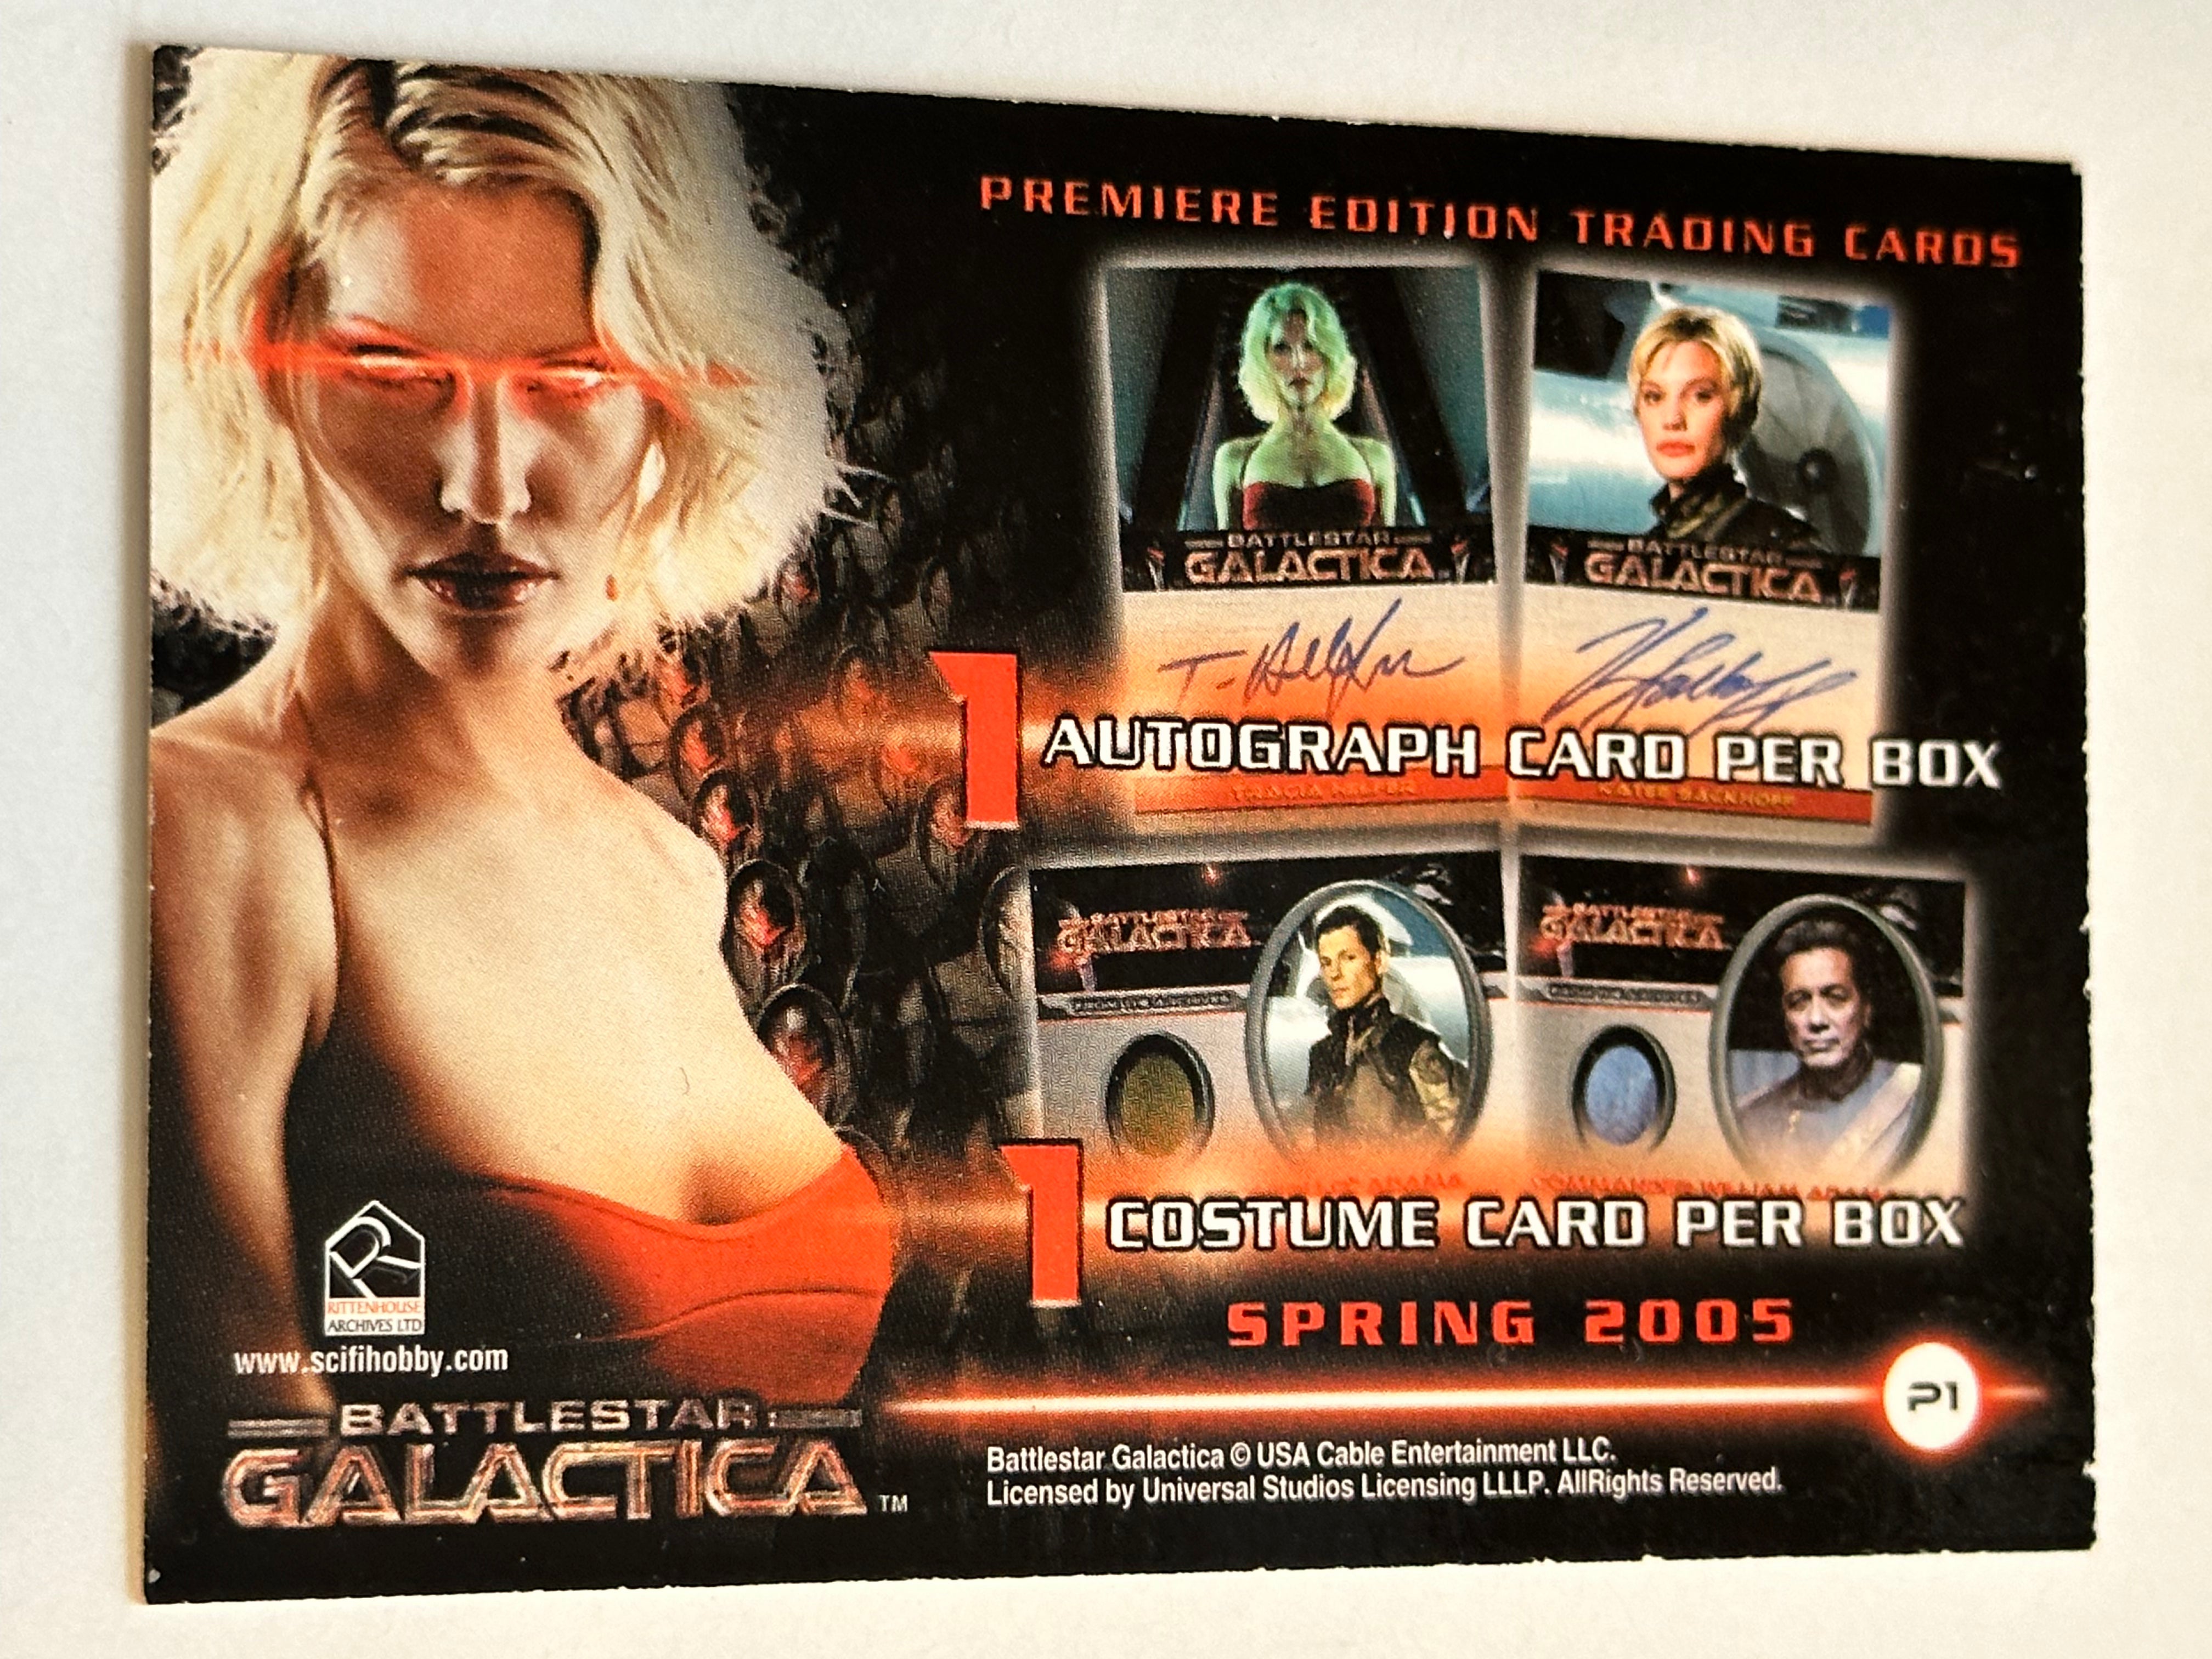 Battlestar Galactica Edward James Olmos signed card with COA